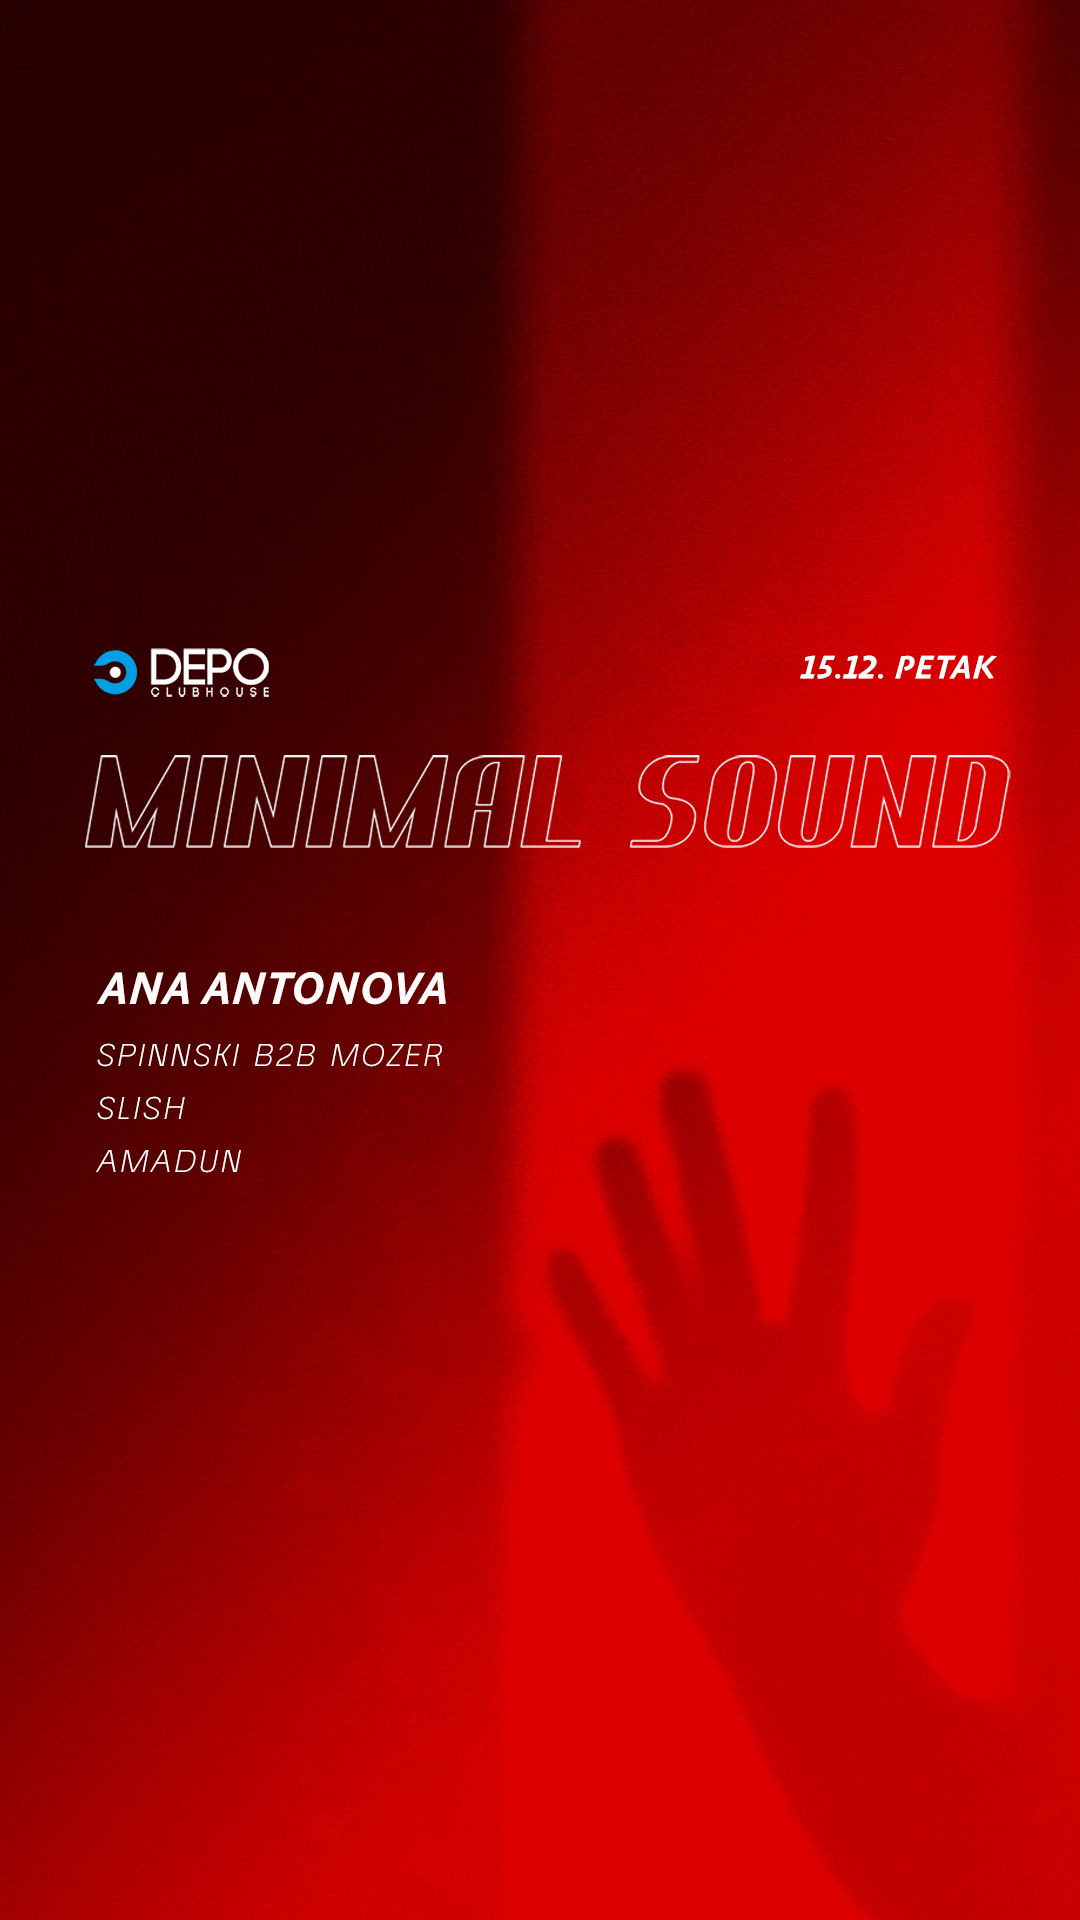 Minimal Sound // Ana Antonova - フライヤー表